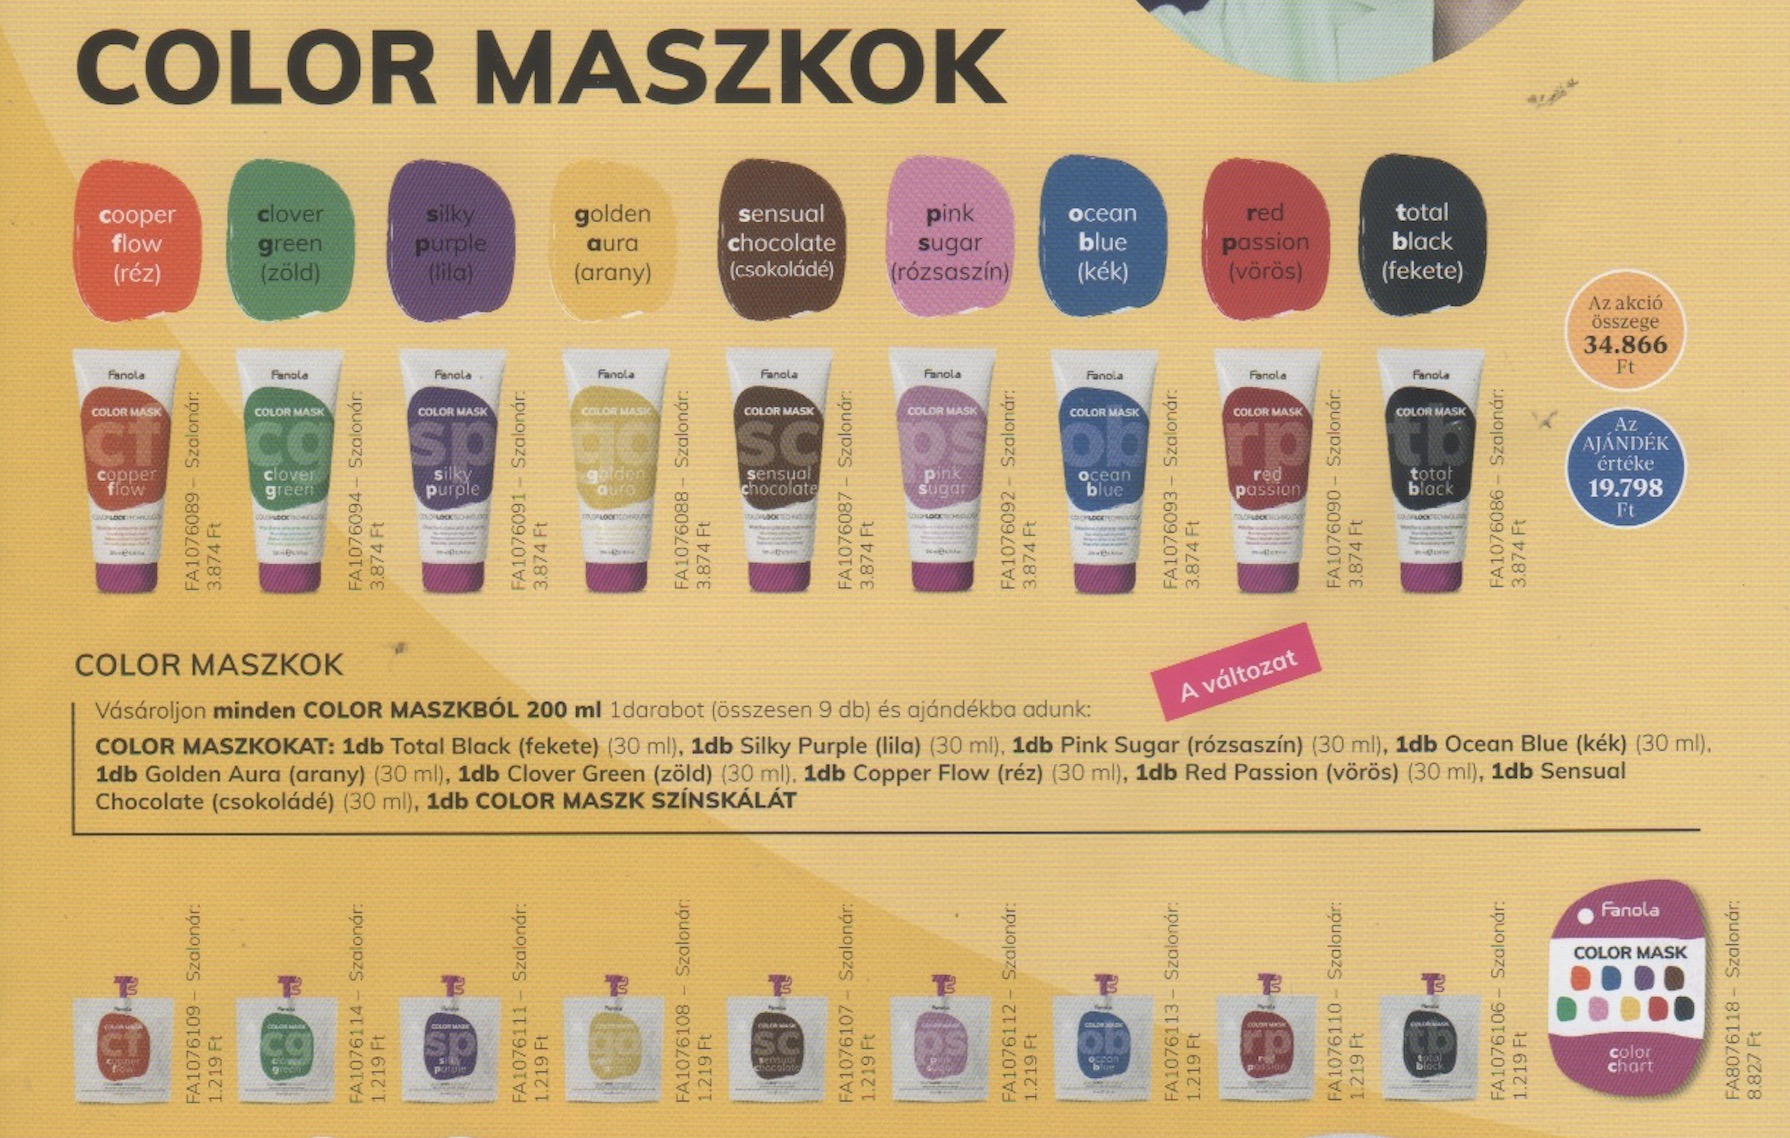 FANOLA Color Mask AKCIÓS Csomag A változat